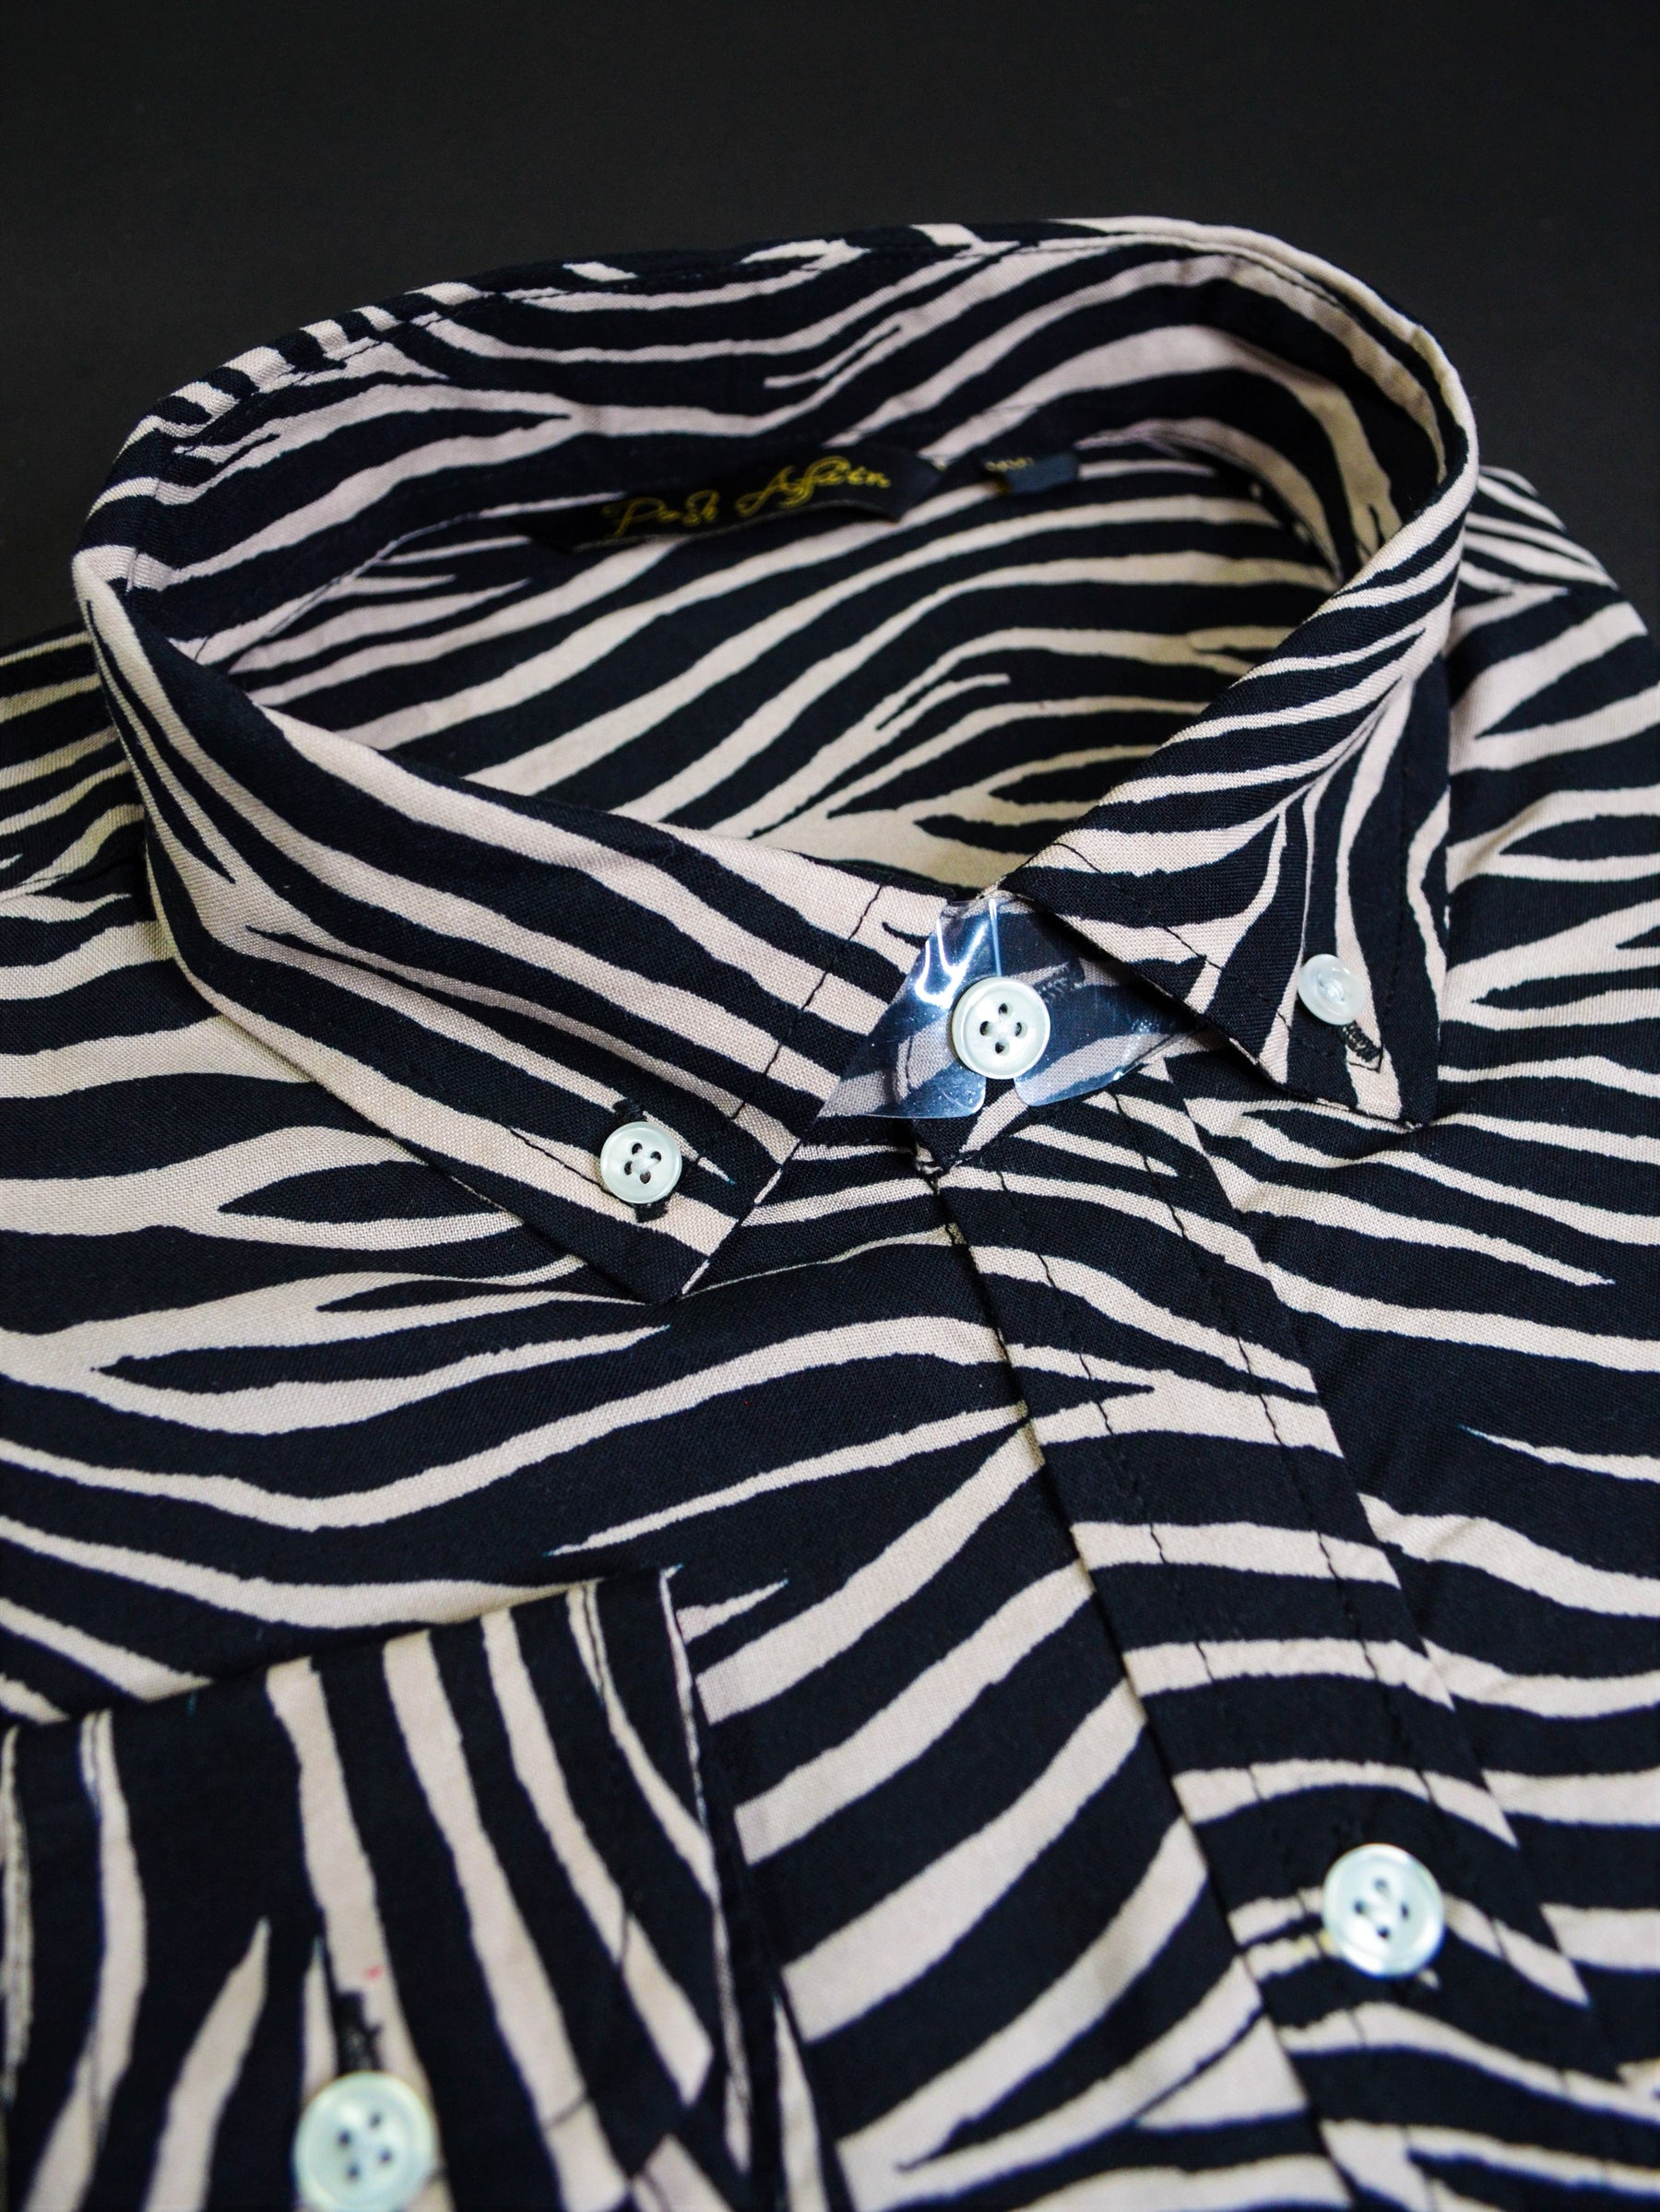 Zebra Stripe Print Casual Men's Shirt